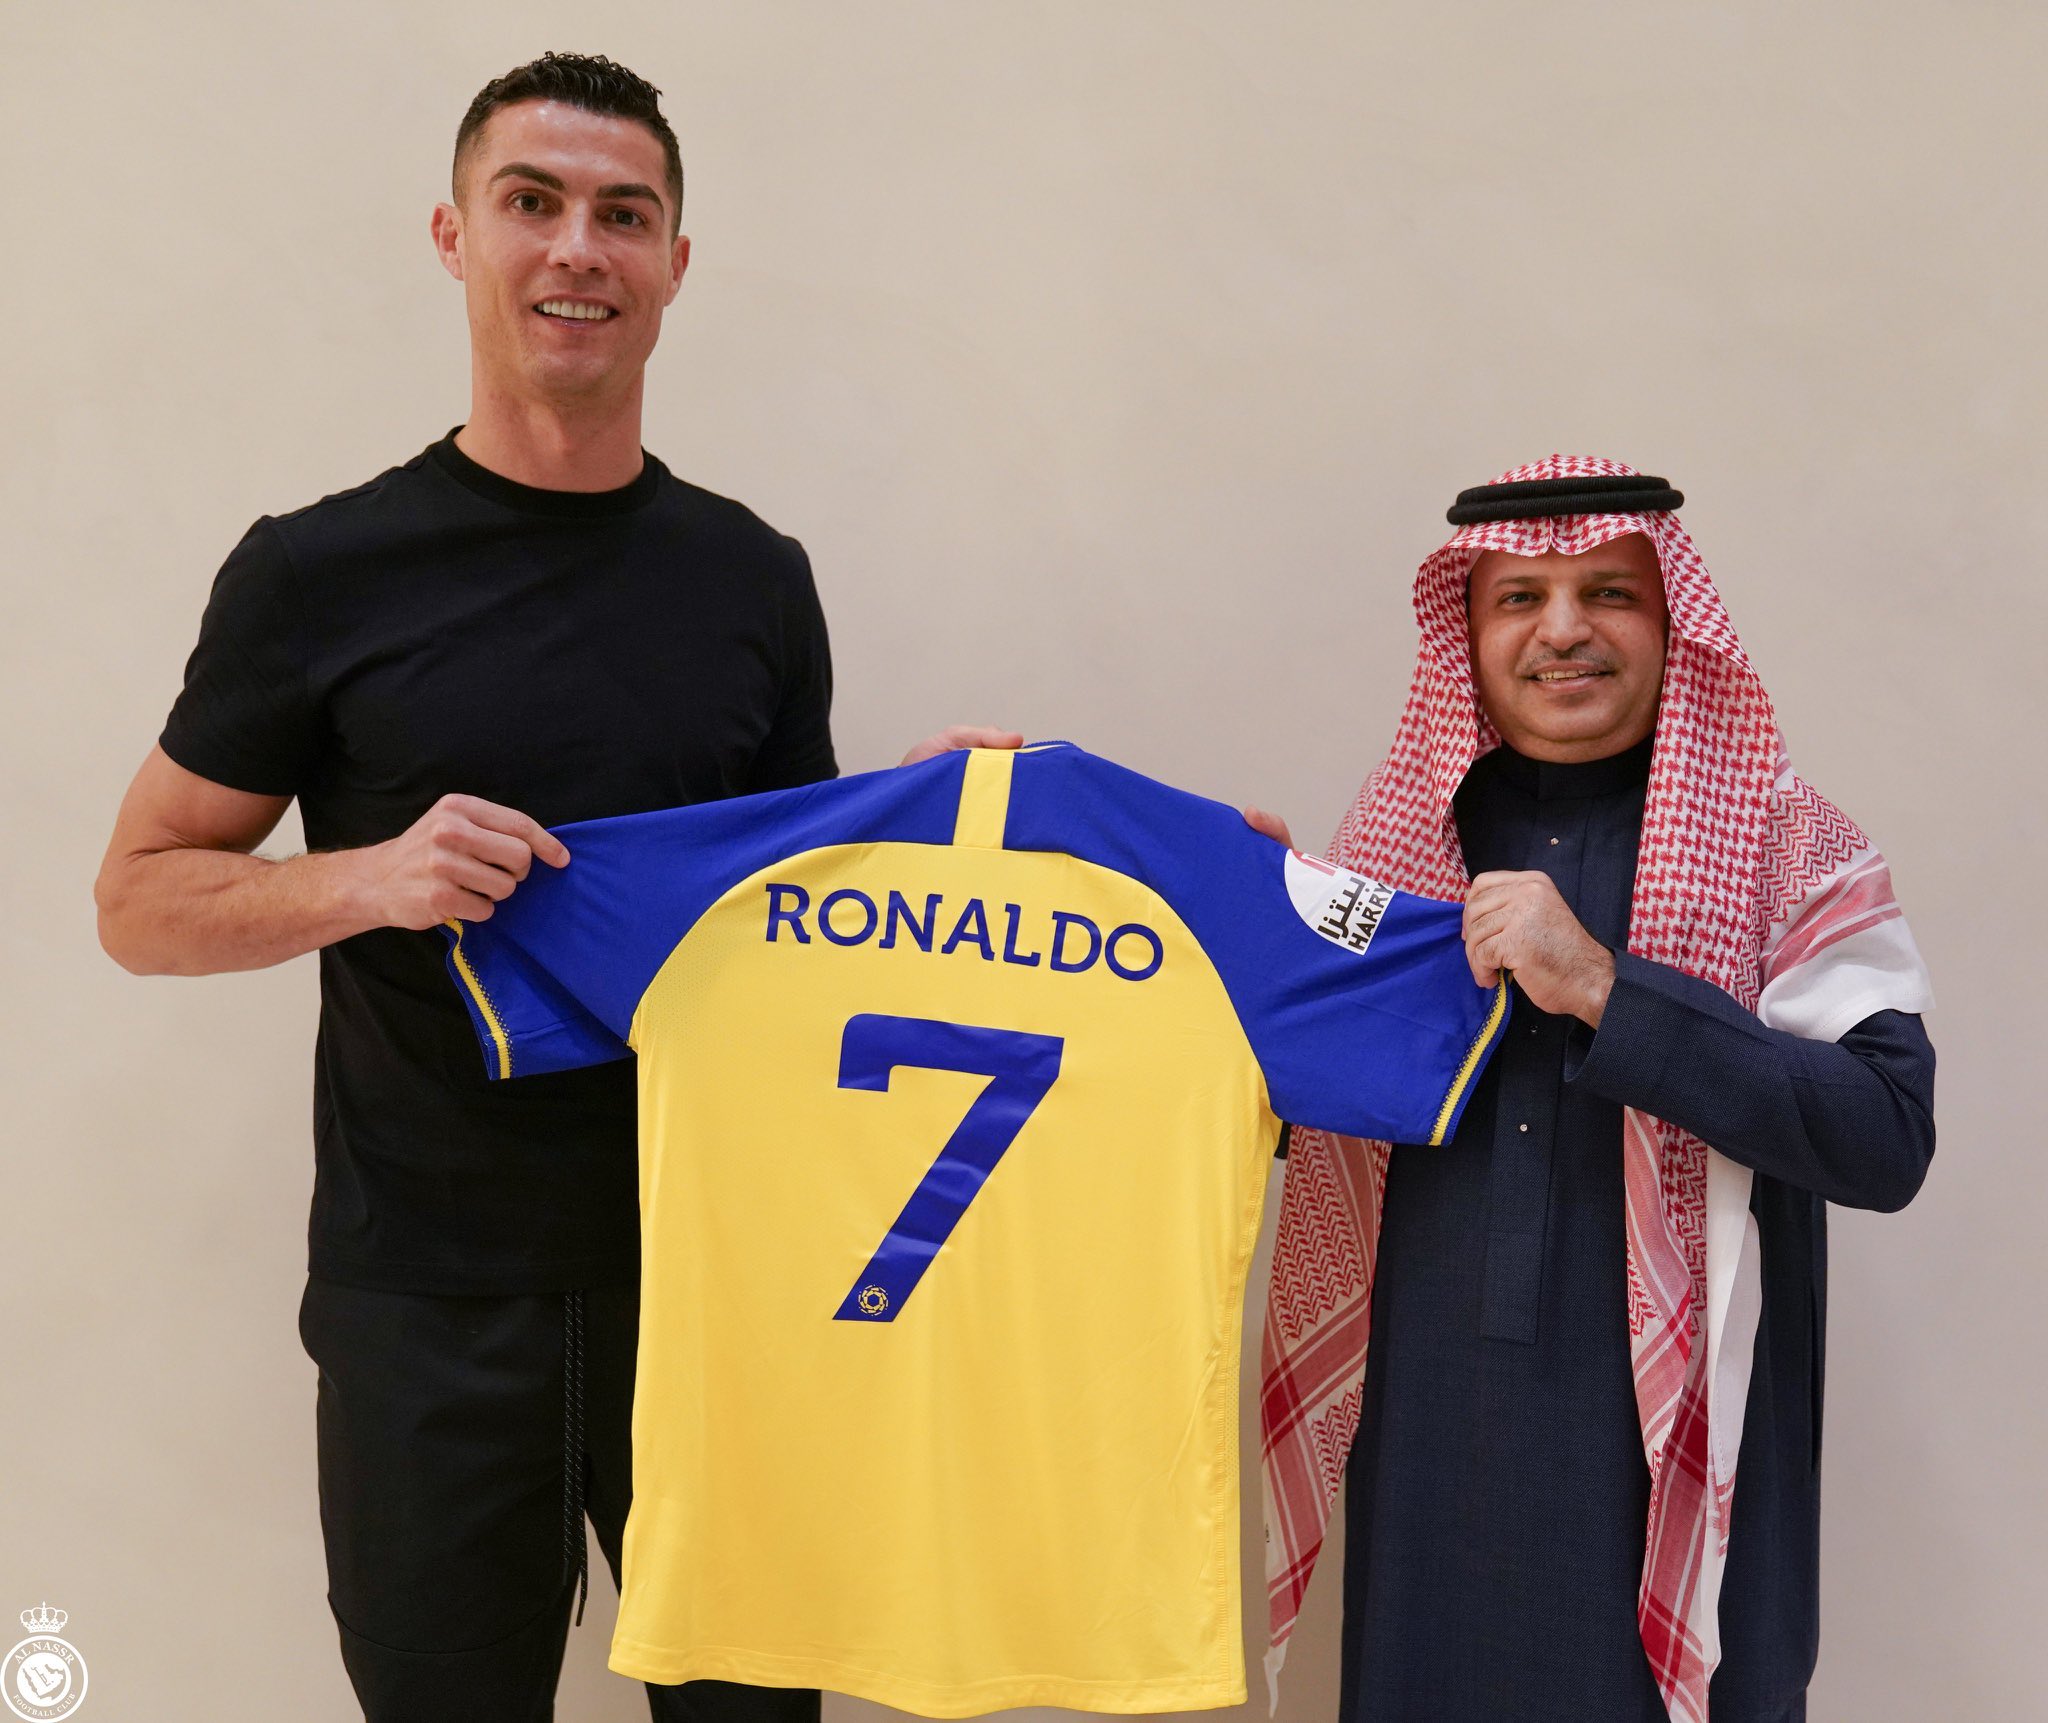 Breaking: Cristiano Ronaldo to earn N96B as he officially signs for Saudi Arabia’s Al Nassr [photos]